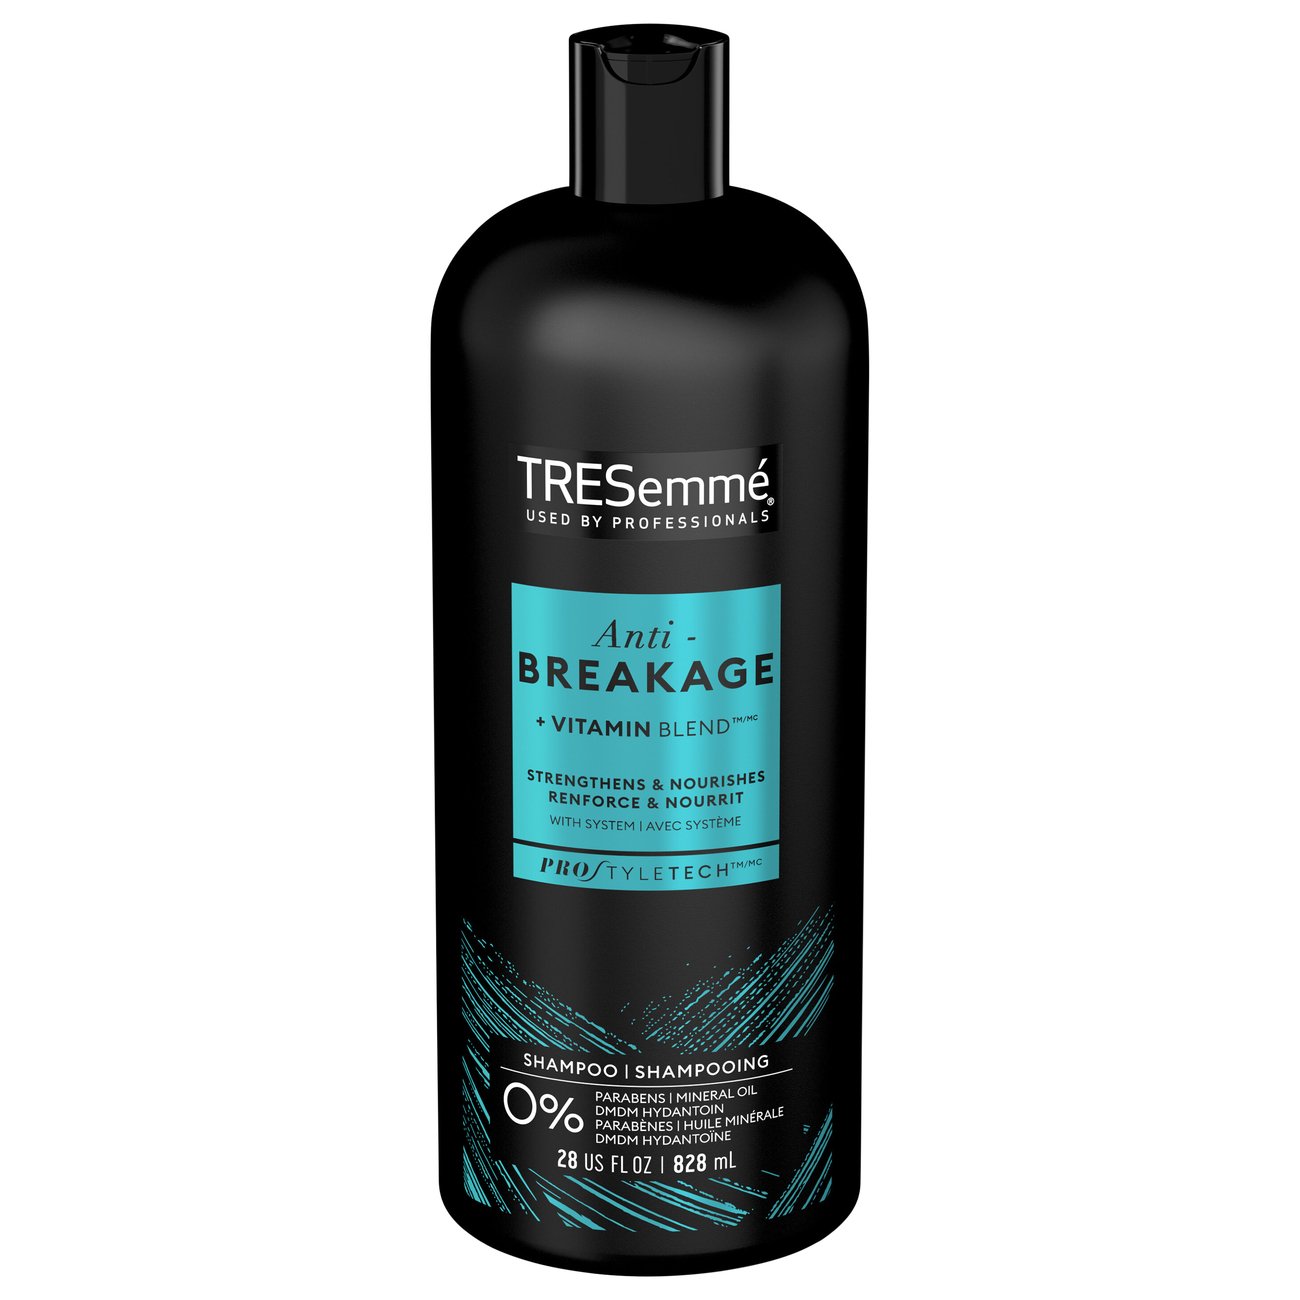 TRESemmé Anti-Breakage Shampoo - & Conditioner at H-E-B